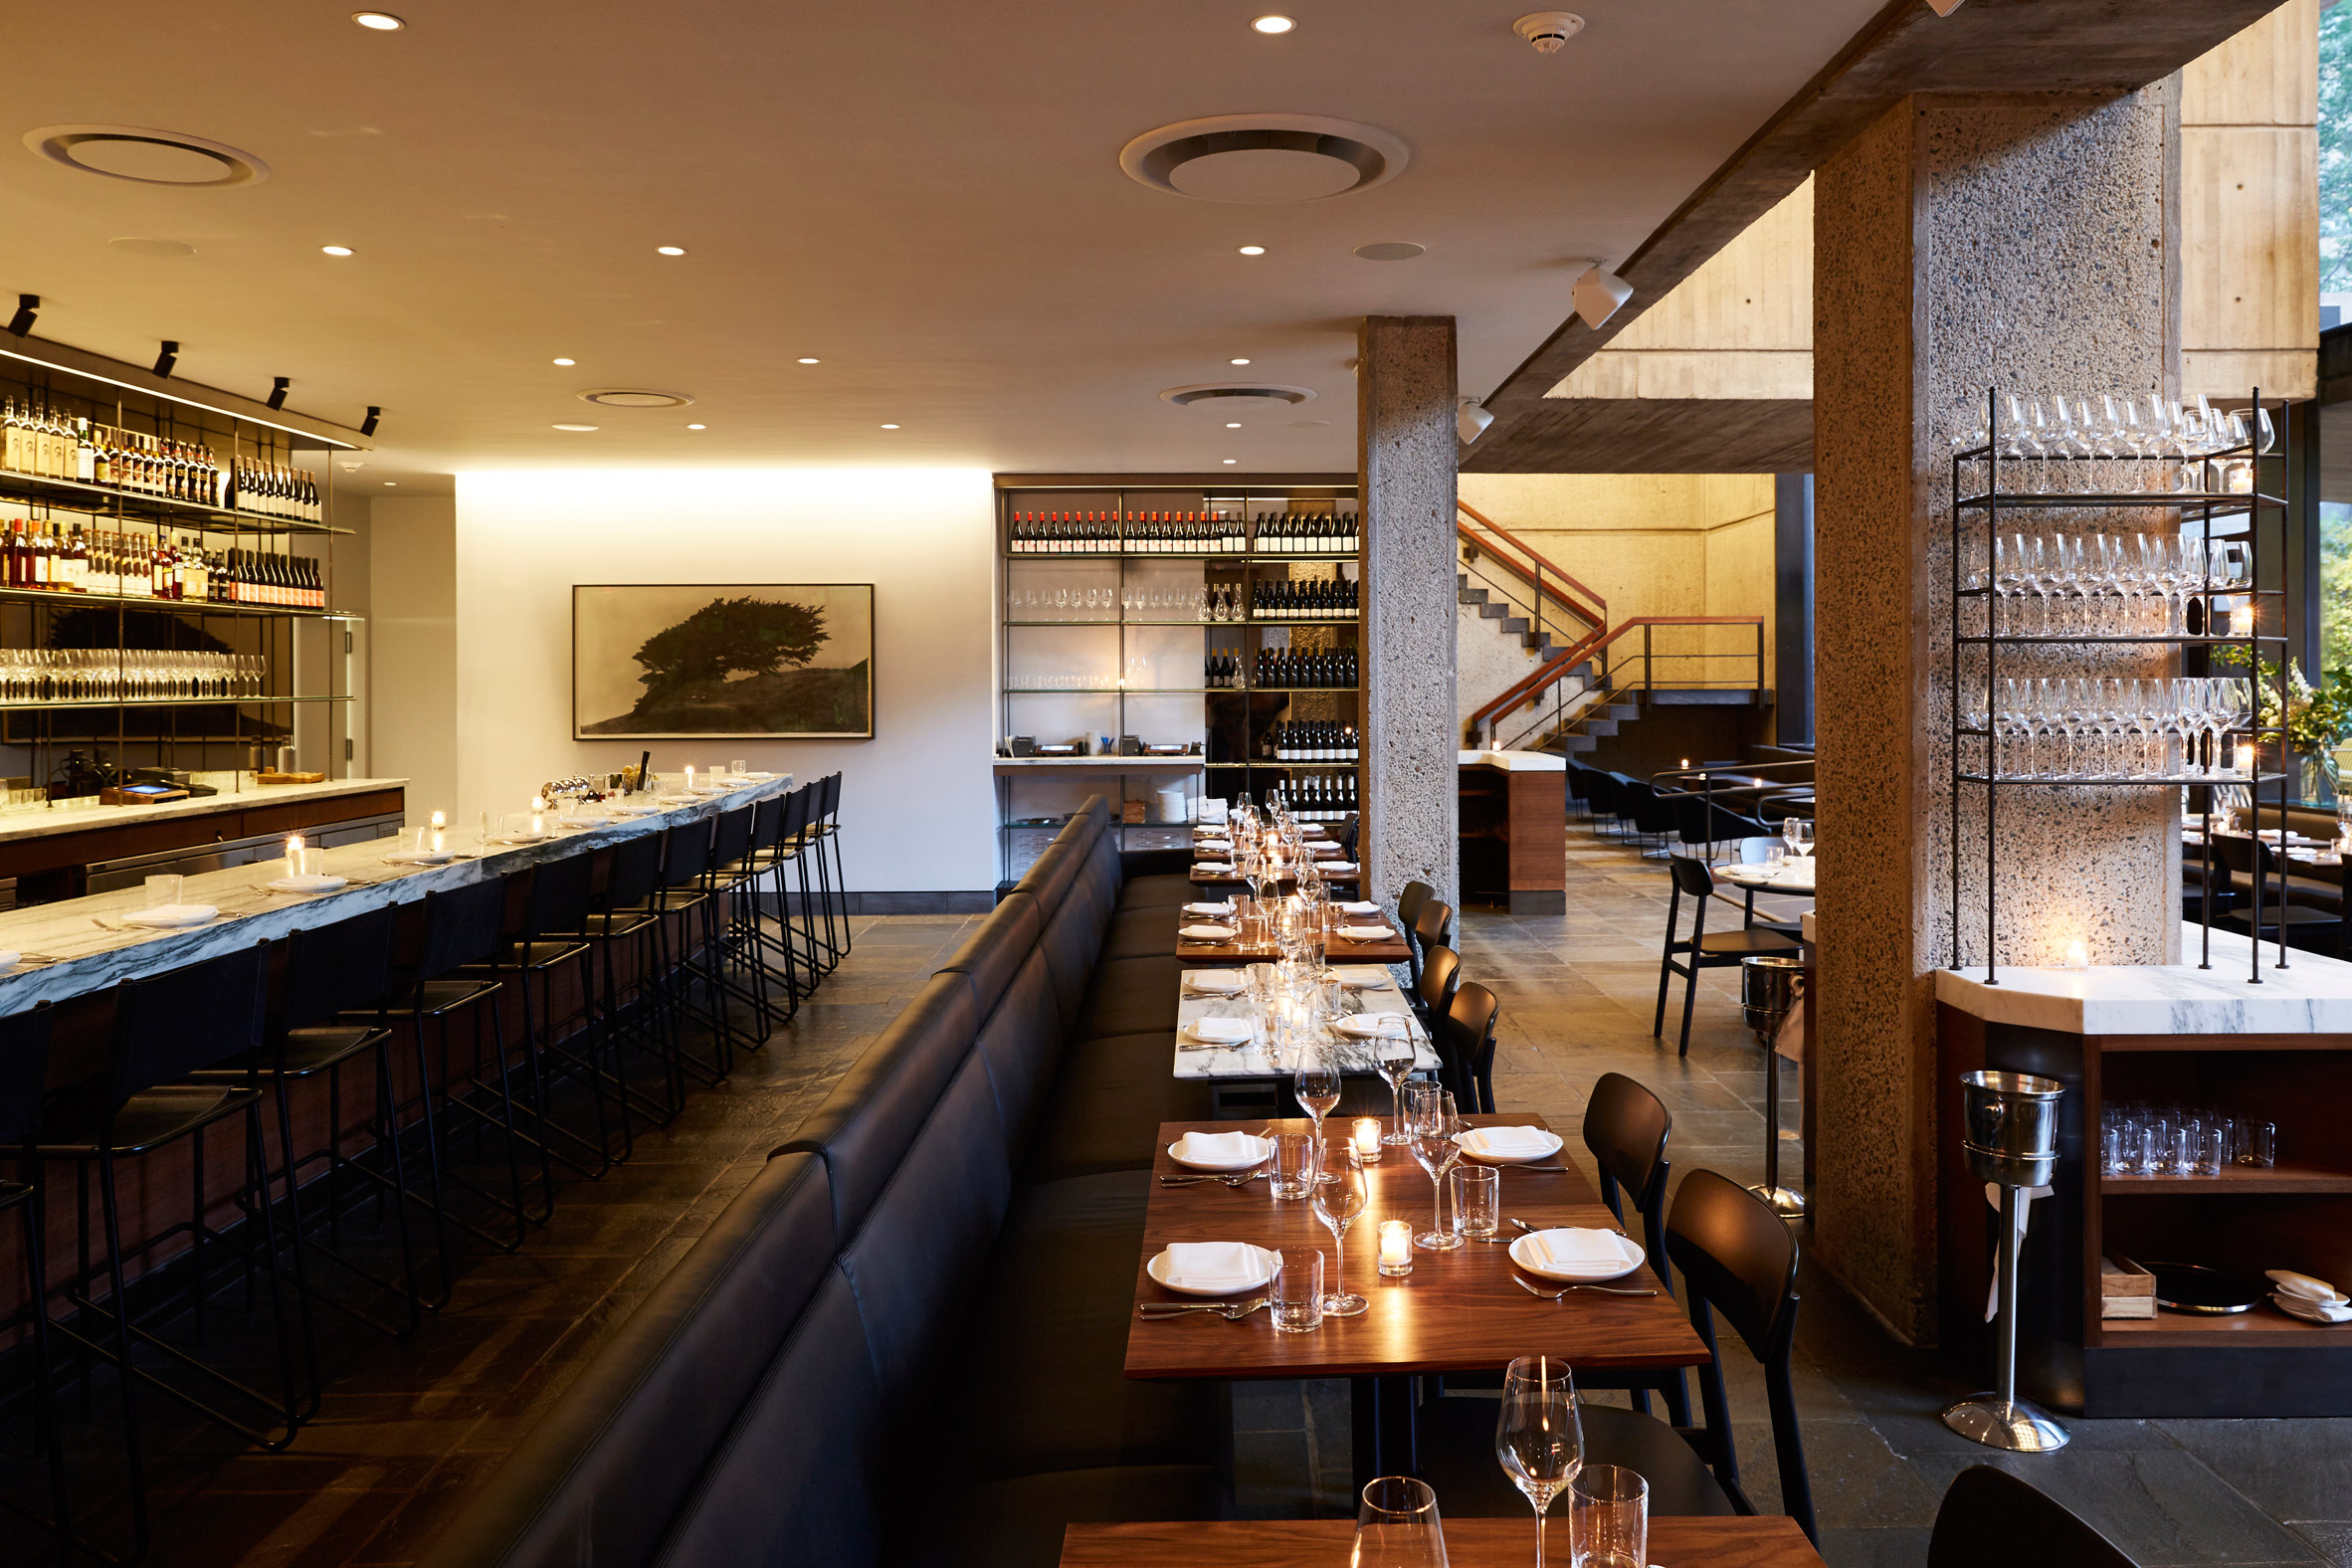 flora-bar-cafe-restaurant-interior-design-beyer-blinder-belle-met-breuer-new-york-city-usa_dezeen_2364_col_3-1